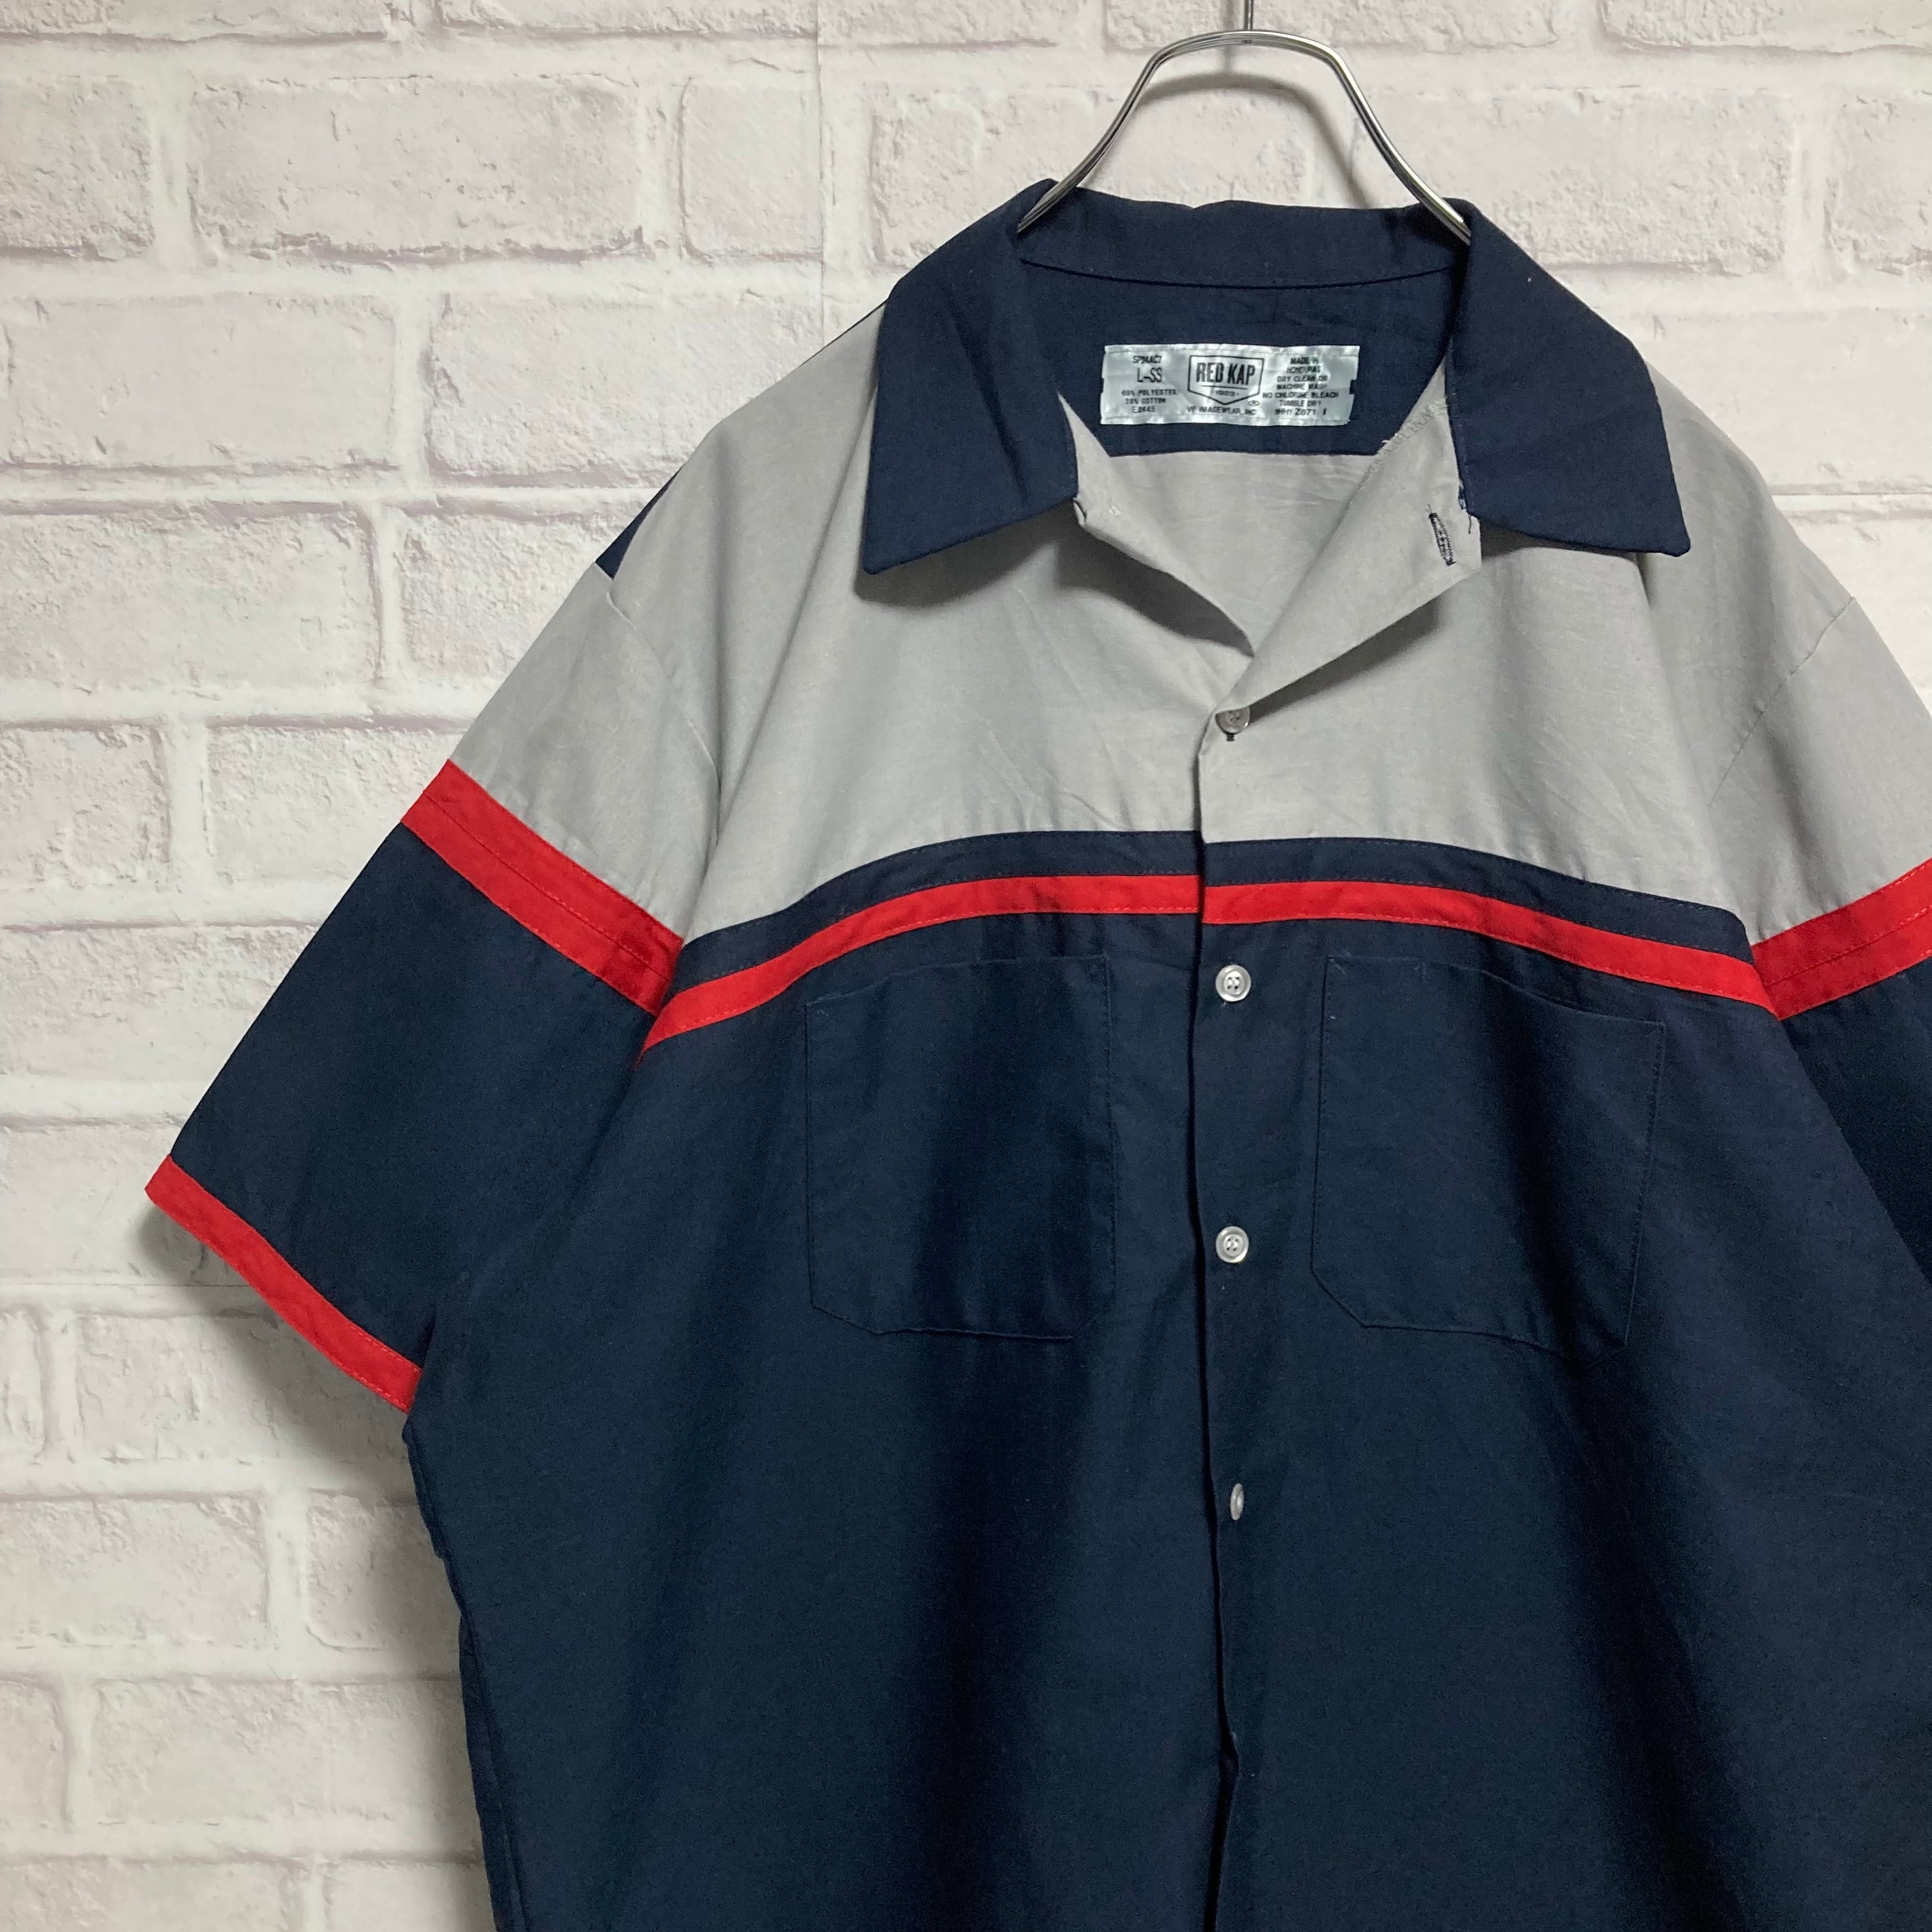 RED KAP】S/S Shirt L “WORK SHIRT” レッドキャップ 半袖 ワークシャツ ...